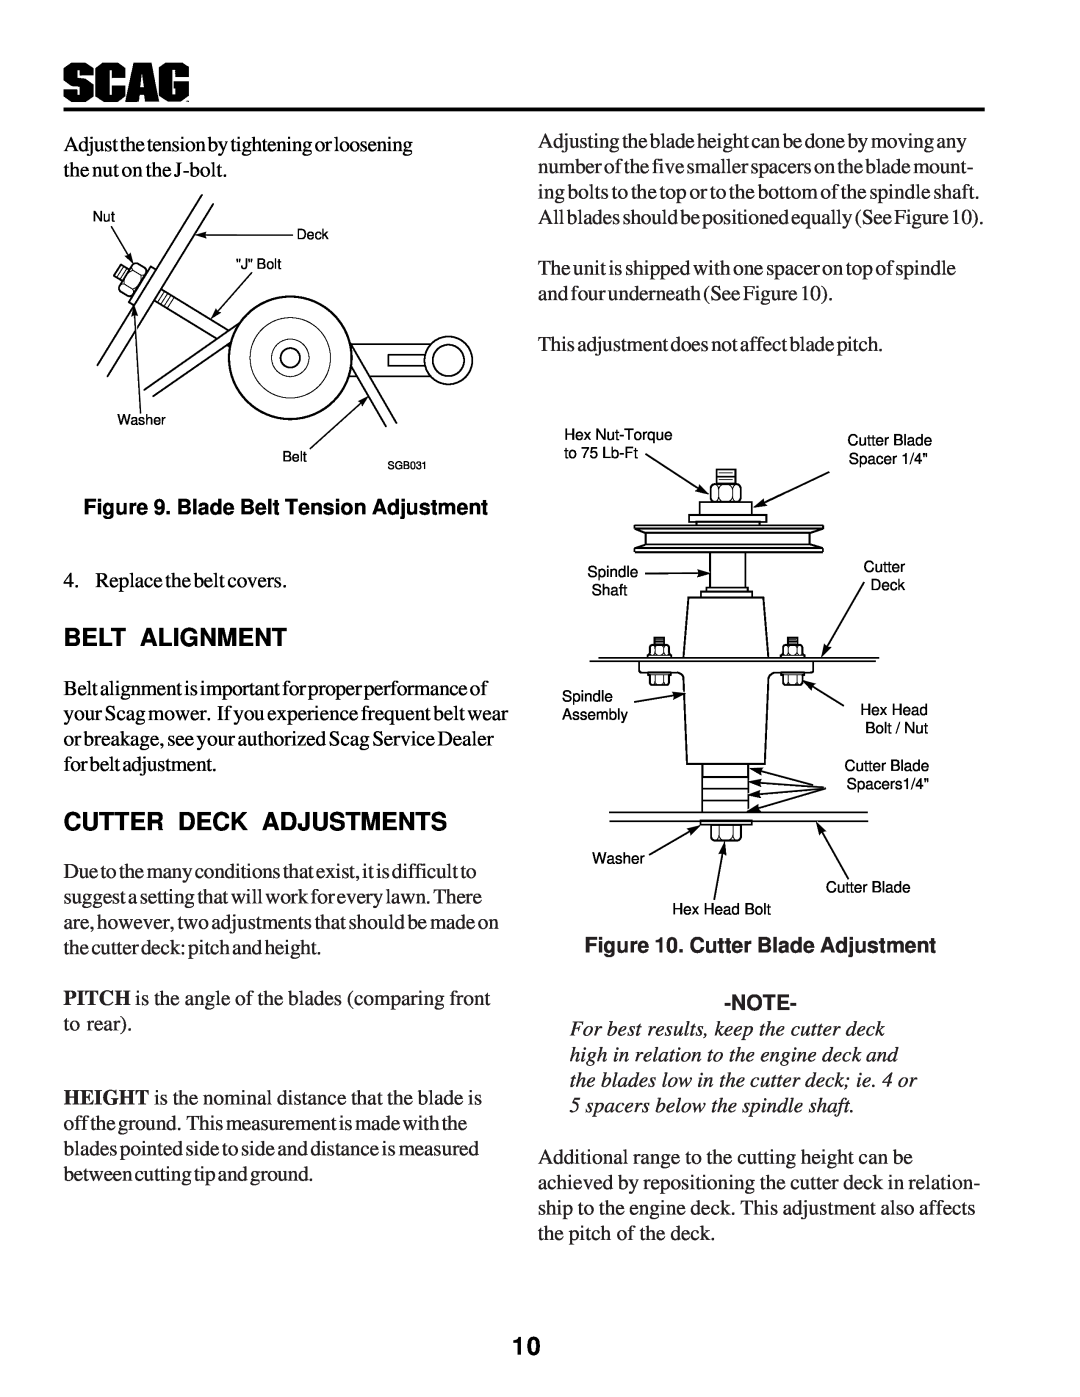 Scag Power Equipment STHM Belt Alignment, Cutter Deck Adjustments, Blade Belt Tension Adjustment, Cutter Blade Adjustment 